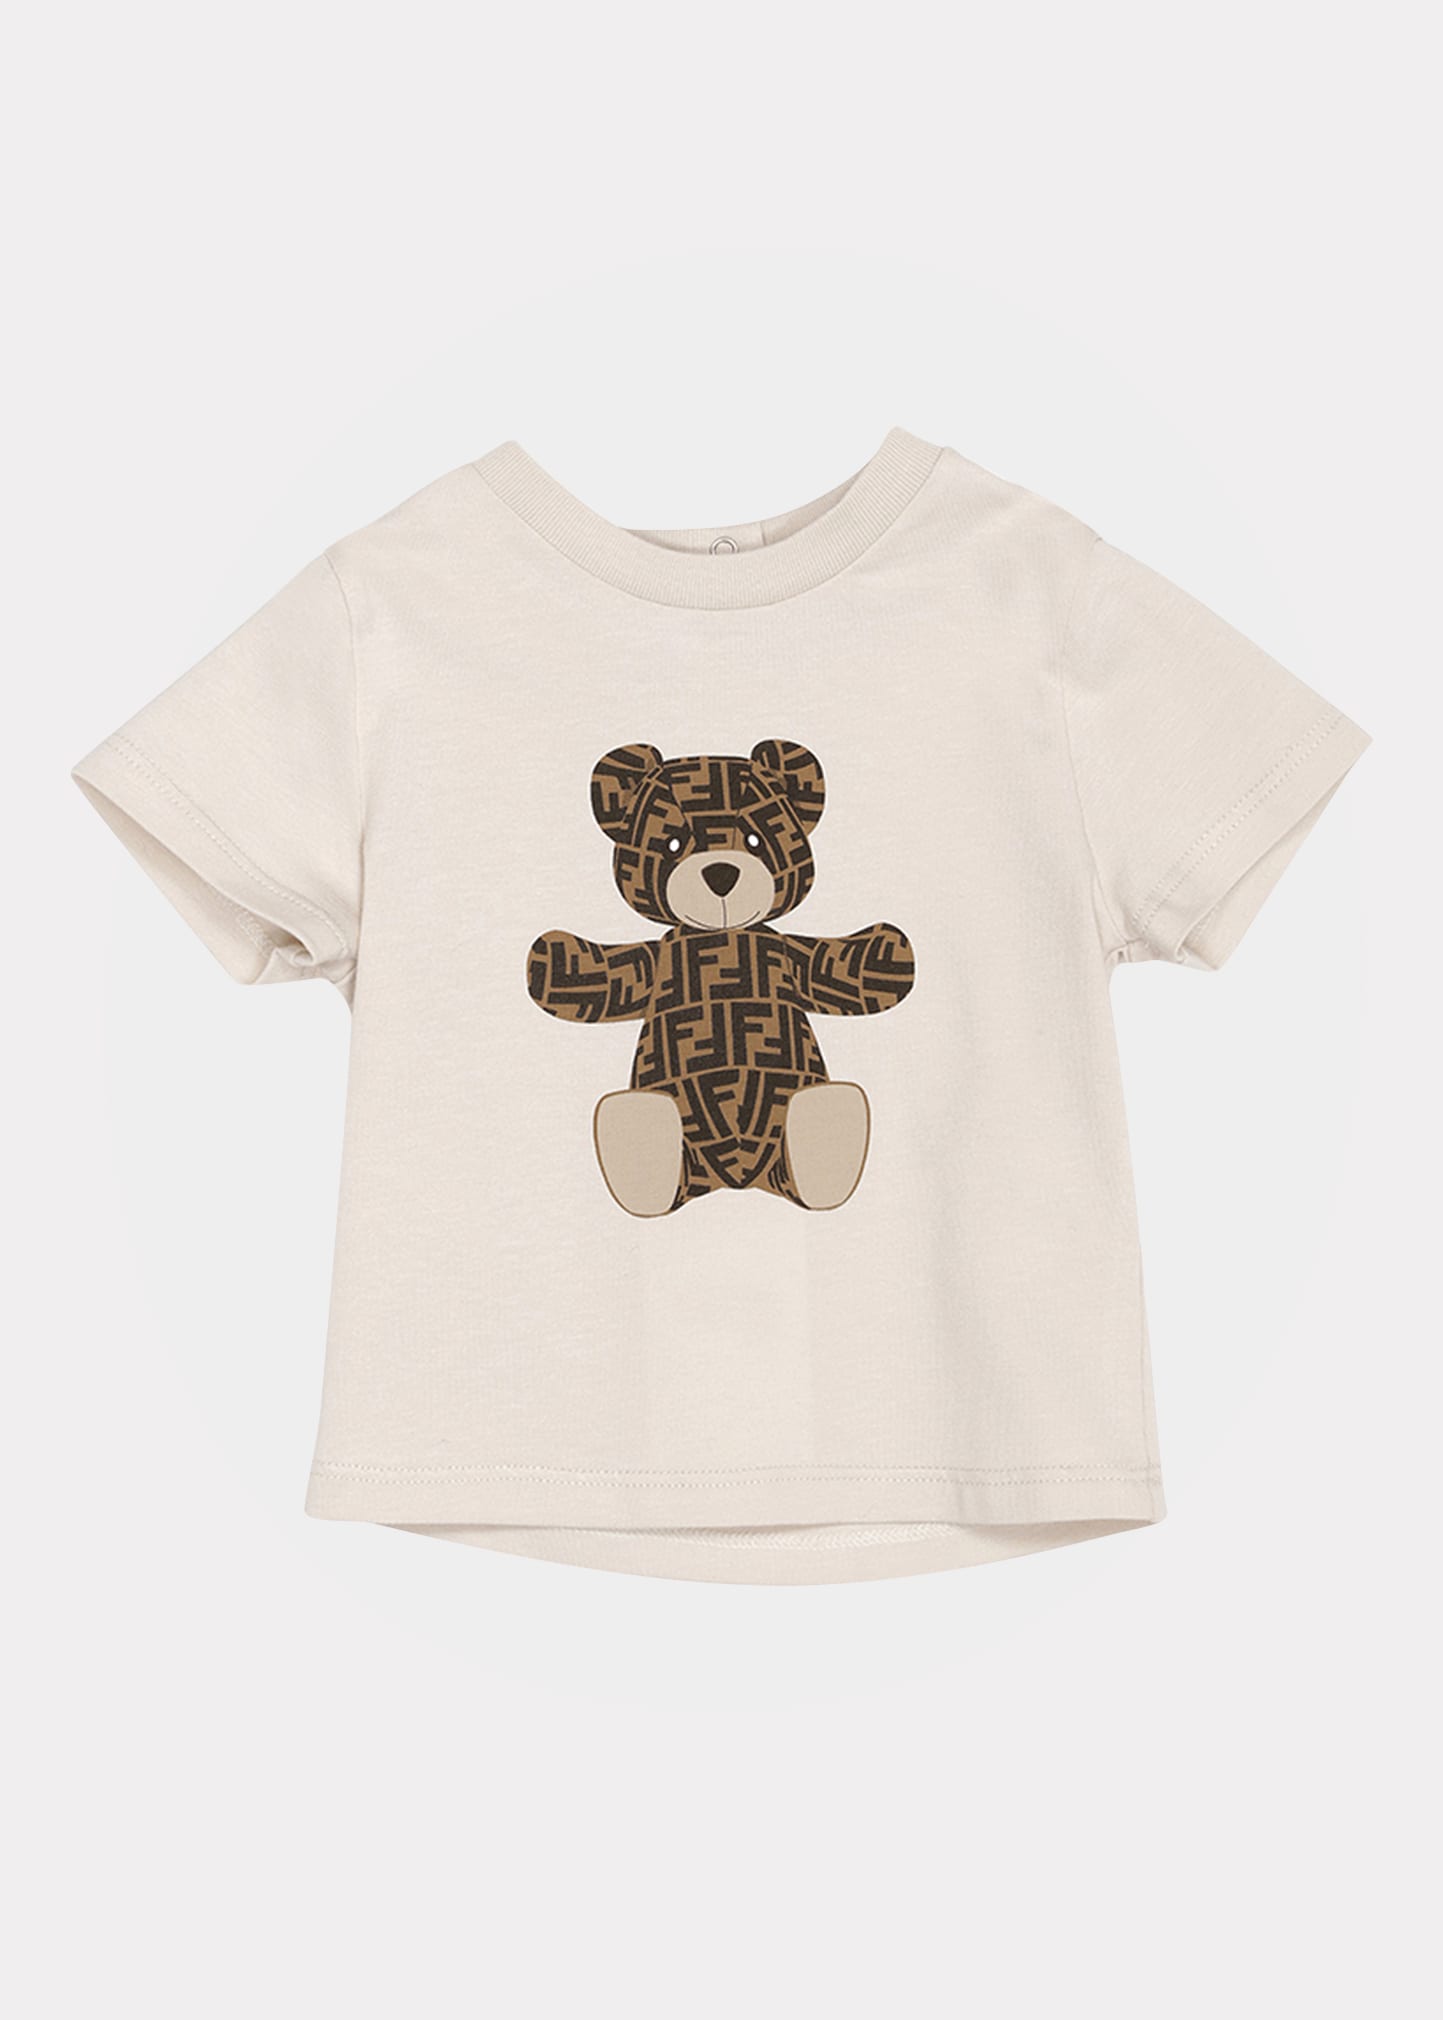 Fendi Kid's Monogram Bear T-Shirt, Size 6M-24M